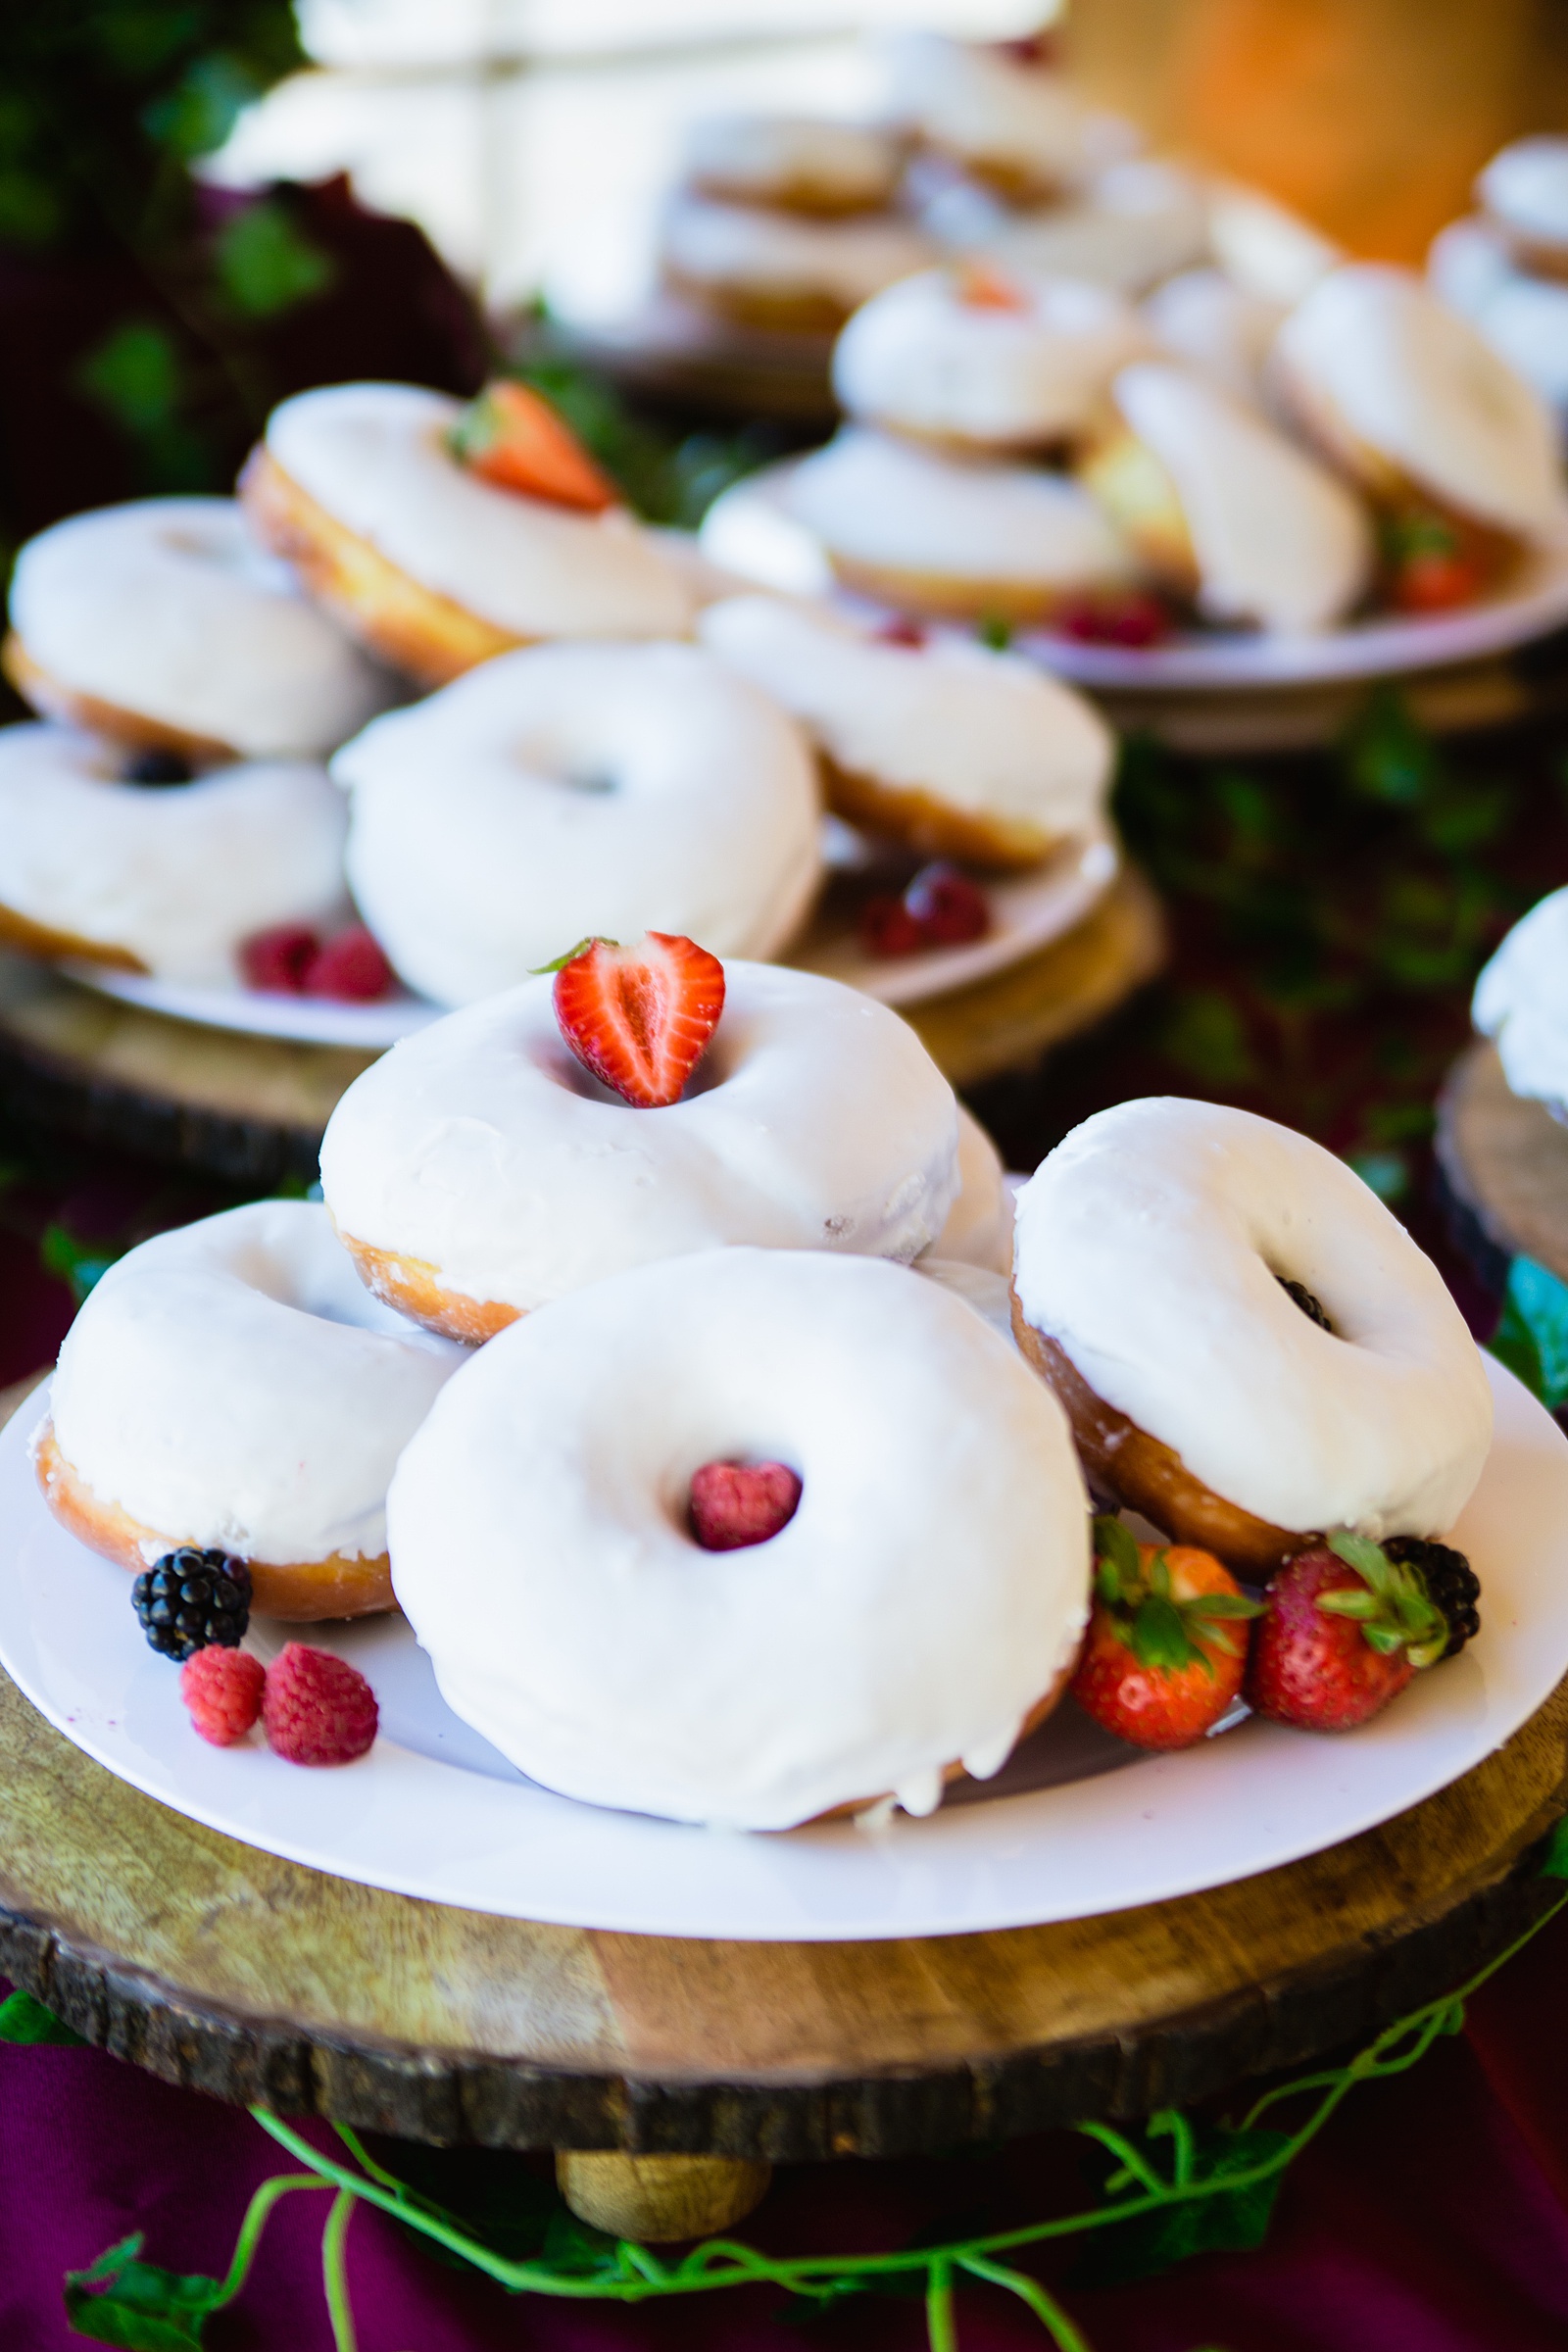 Donut and berry dessert table at Arizona Nordic Village wedding reception by Arizona wedding photographer PMA Photography.